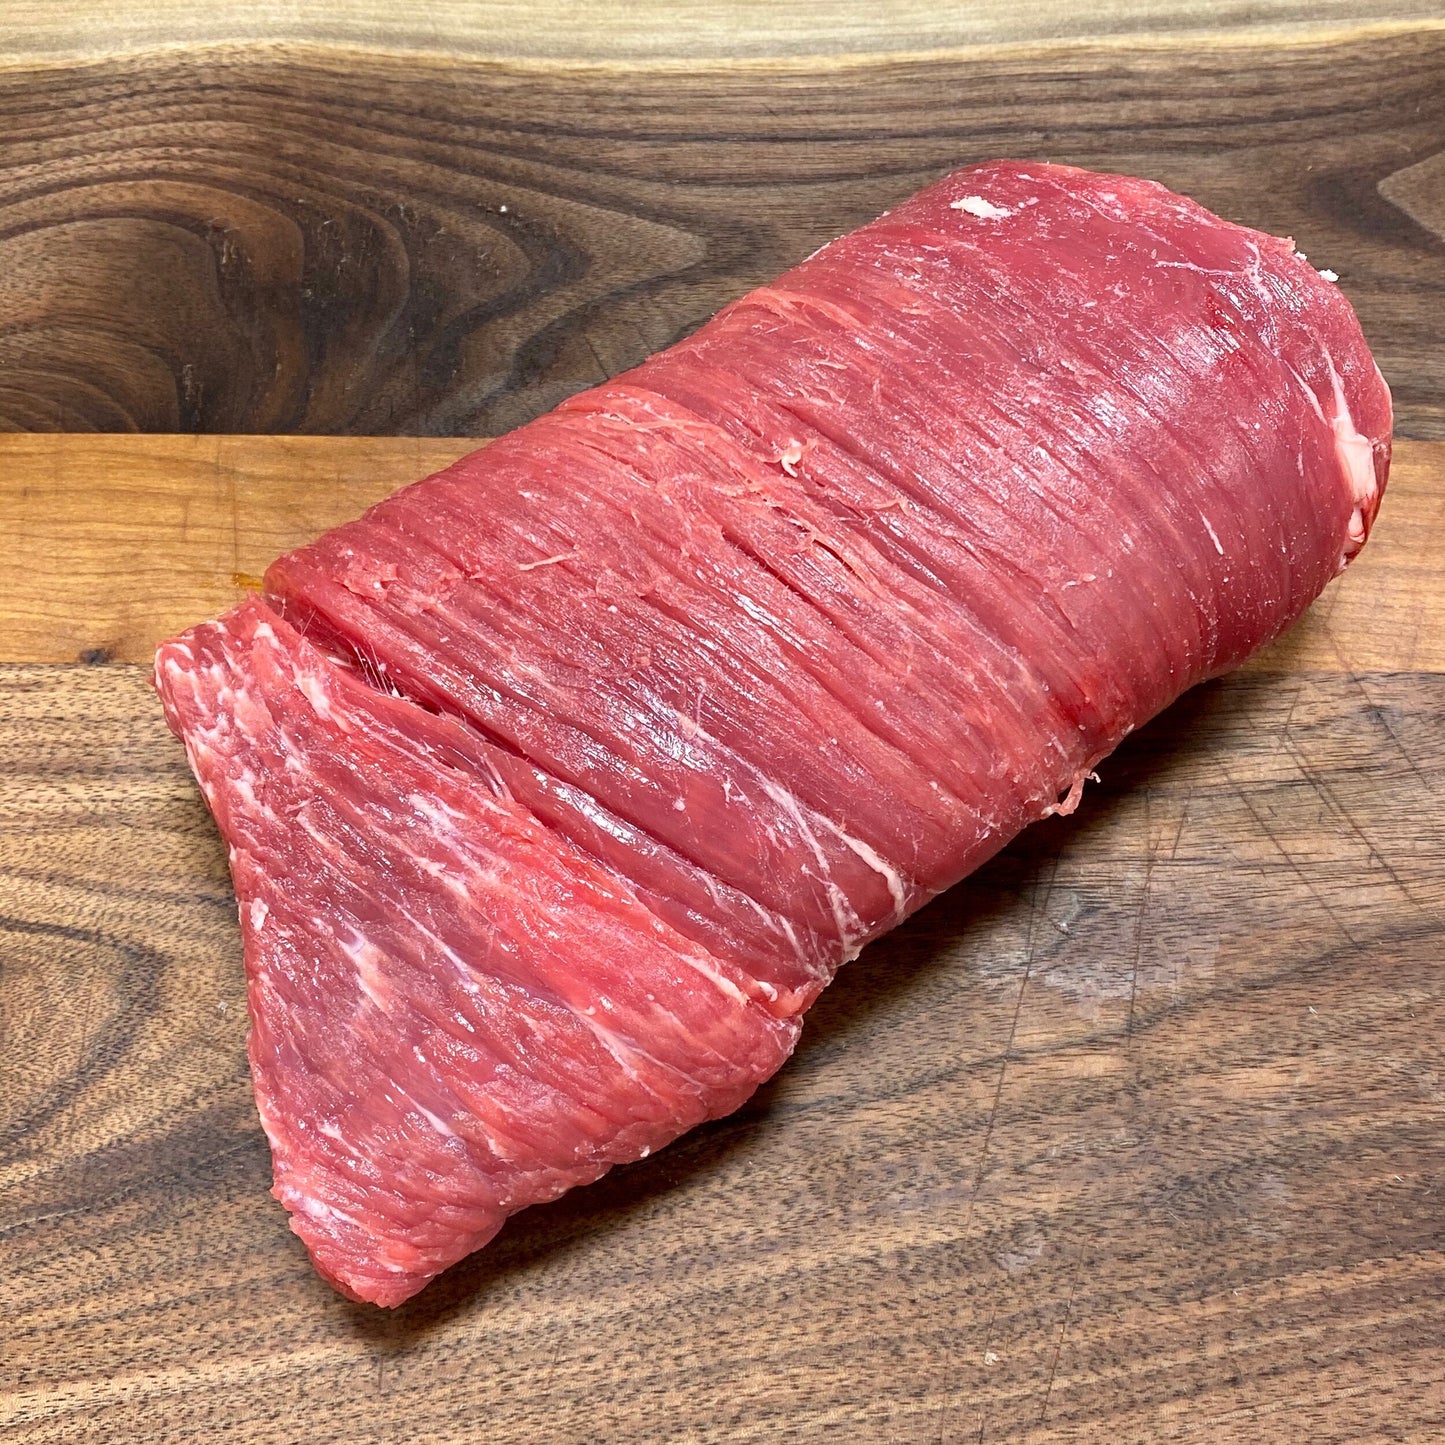 USDA Choice Black Angus Flank Steak (1.5 lbs)